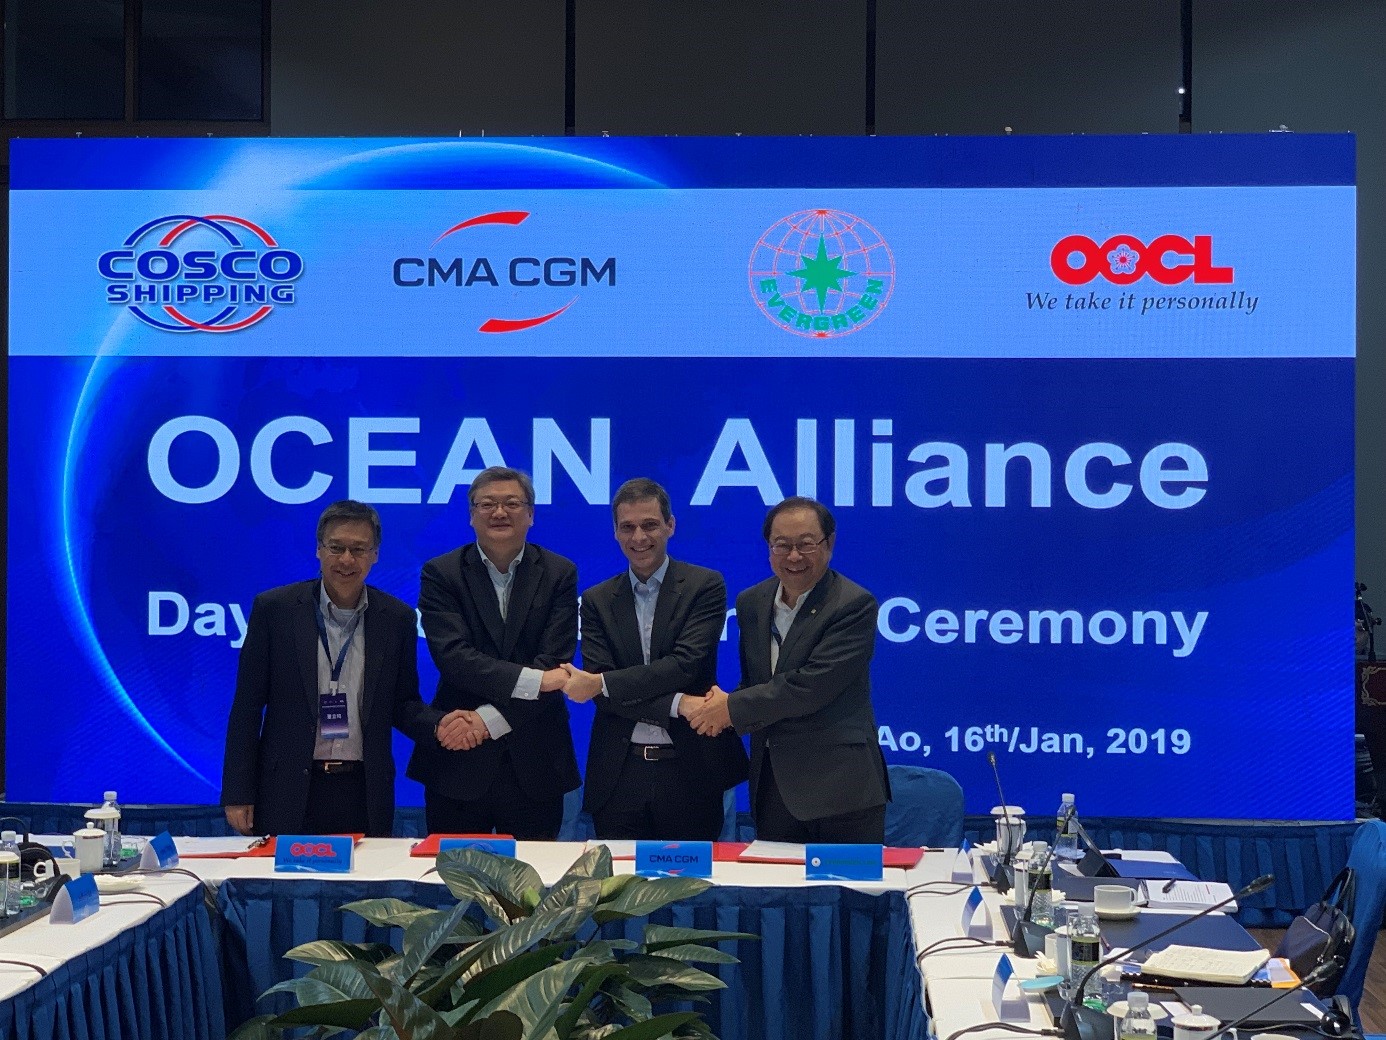 Ocean Alliance unveils its optimized service offer